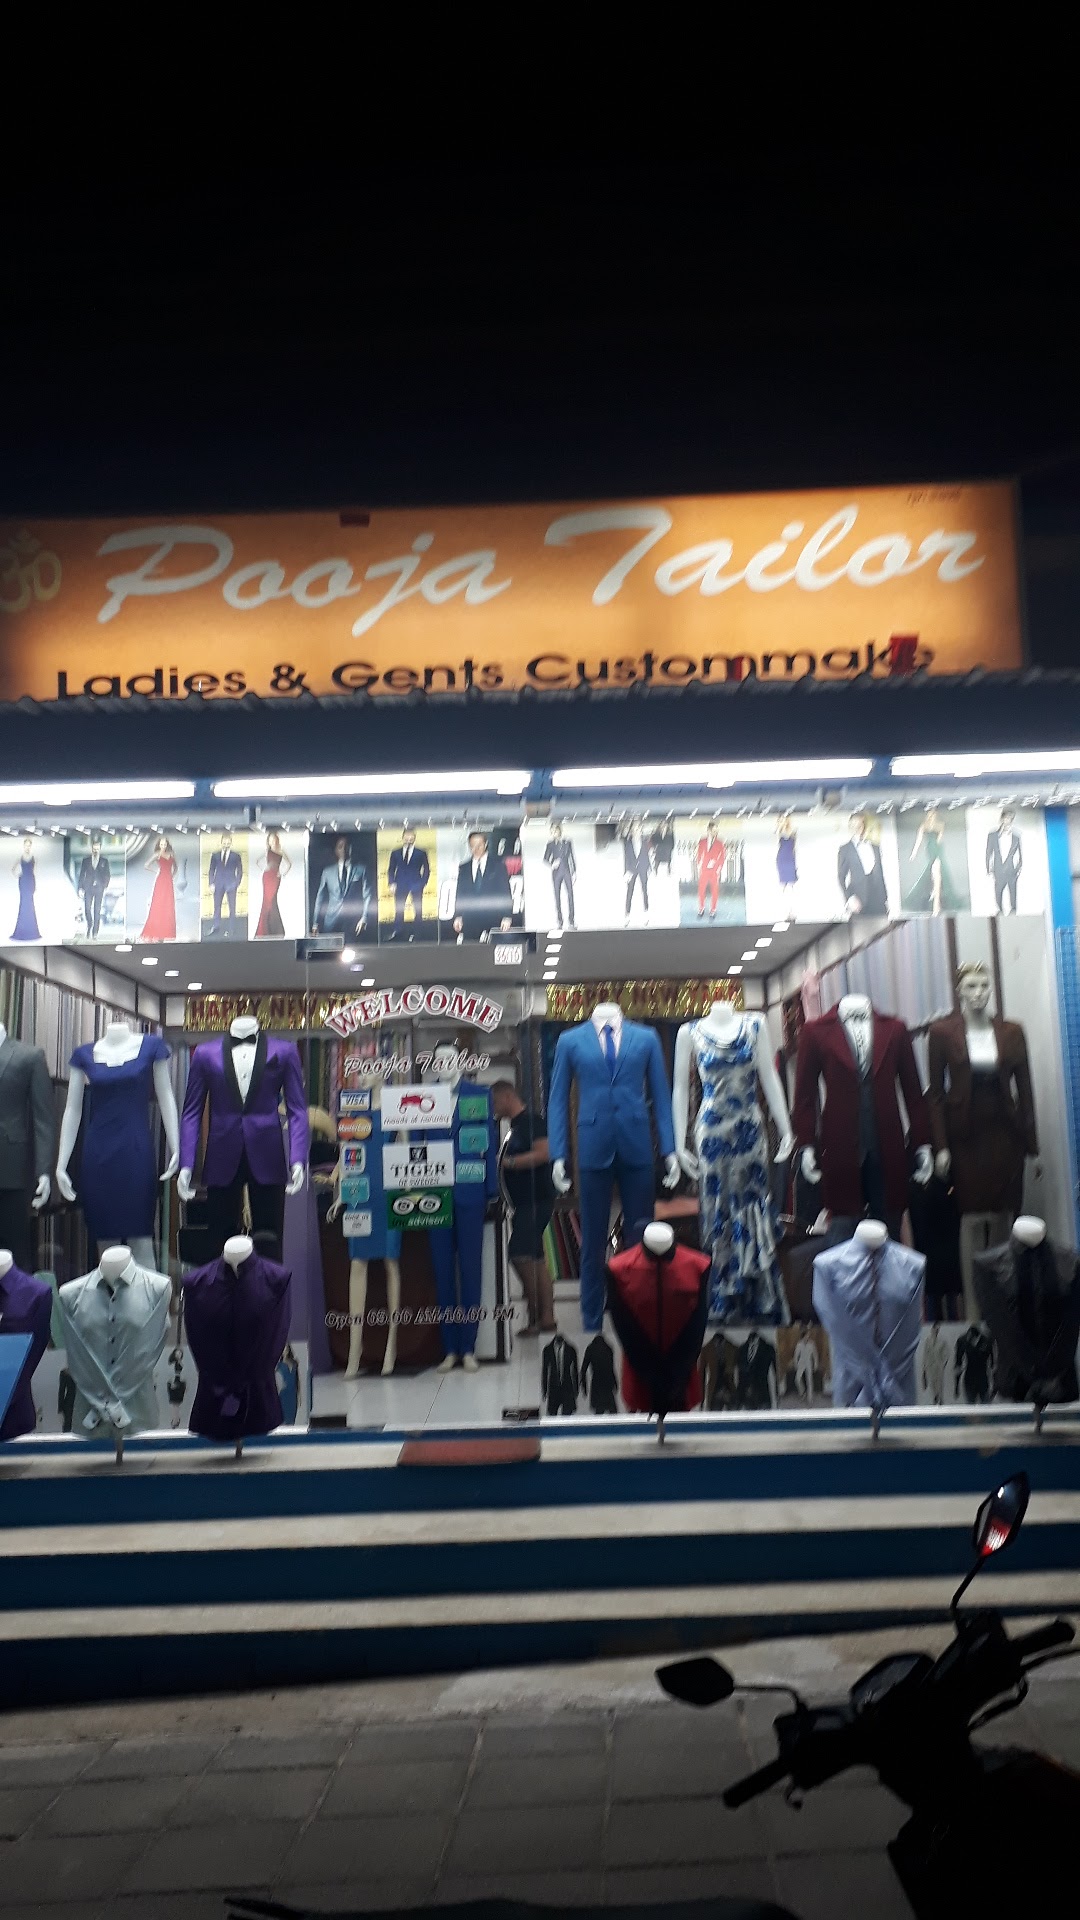 Pooja tailor